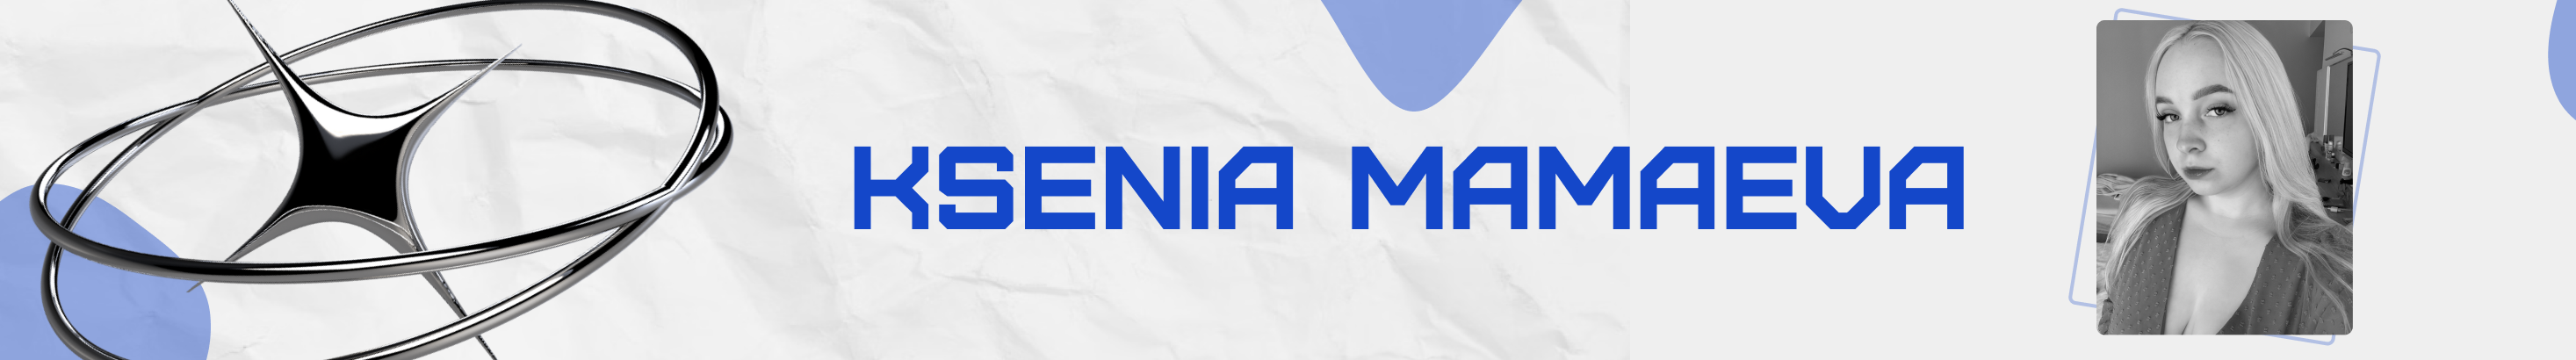 Bannière de profil de Ksenia Mamaeva